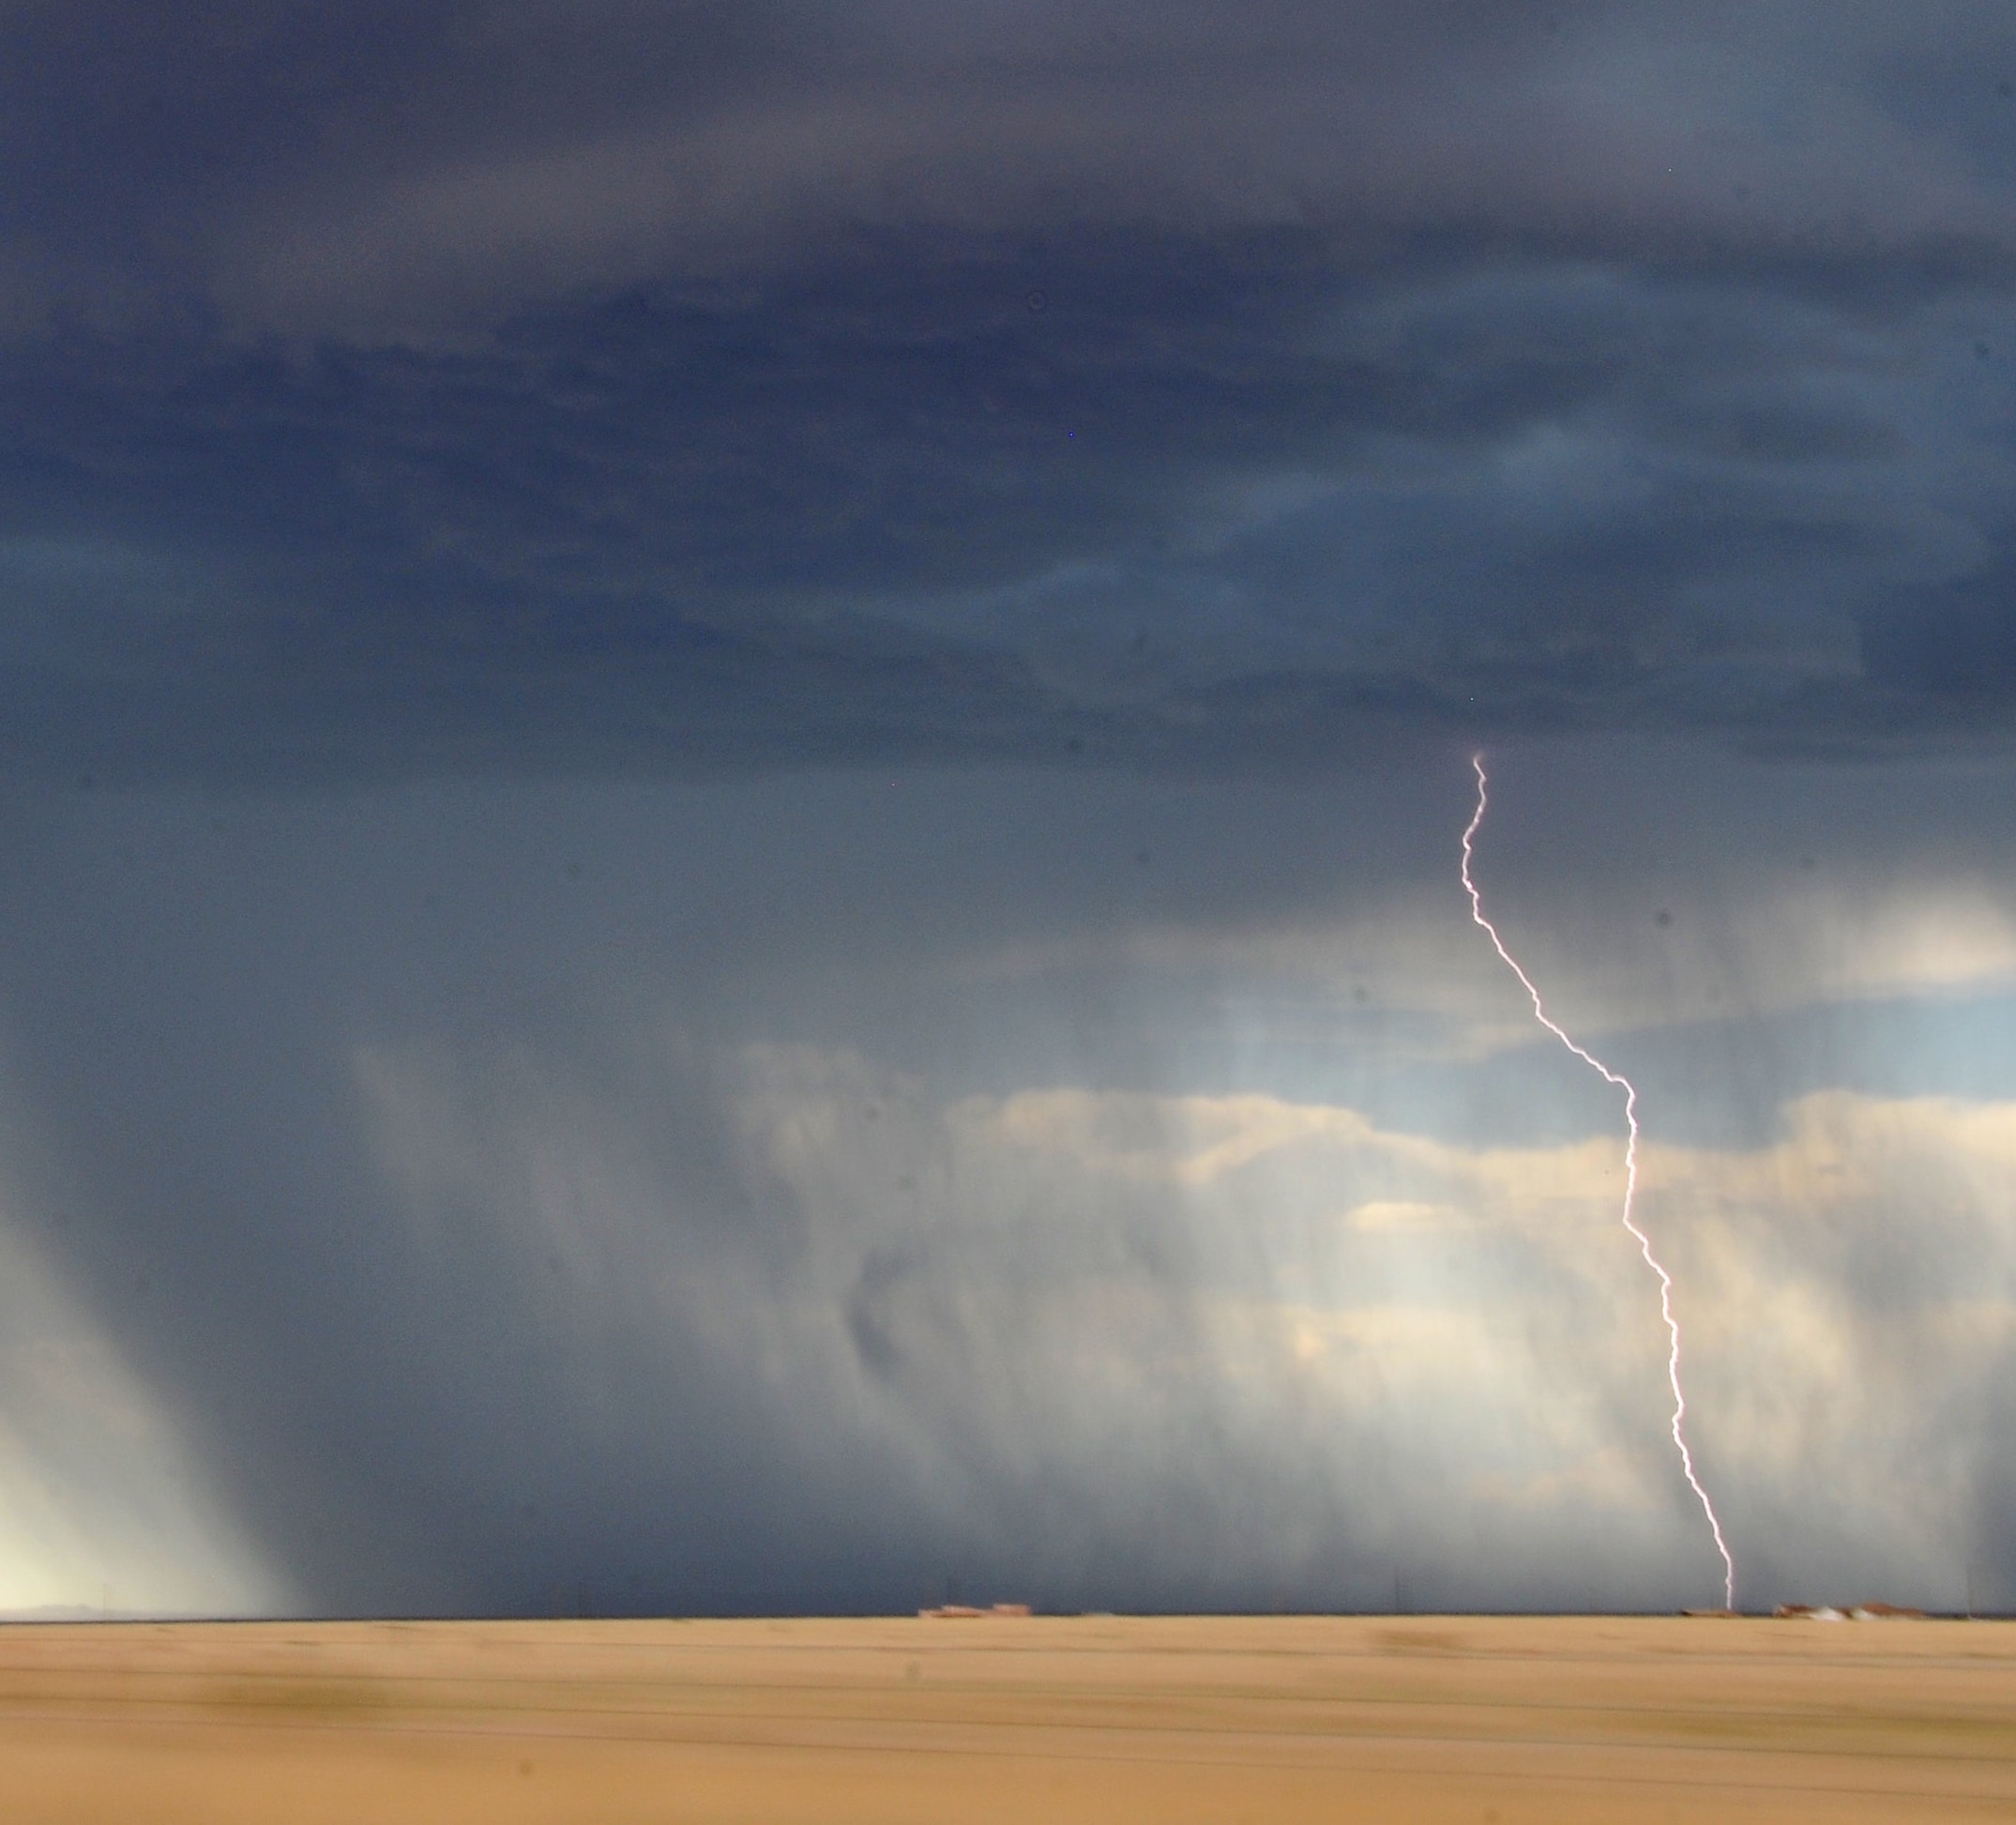 Large rain storm over plains with lightning bolt striking the ground.